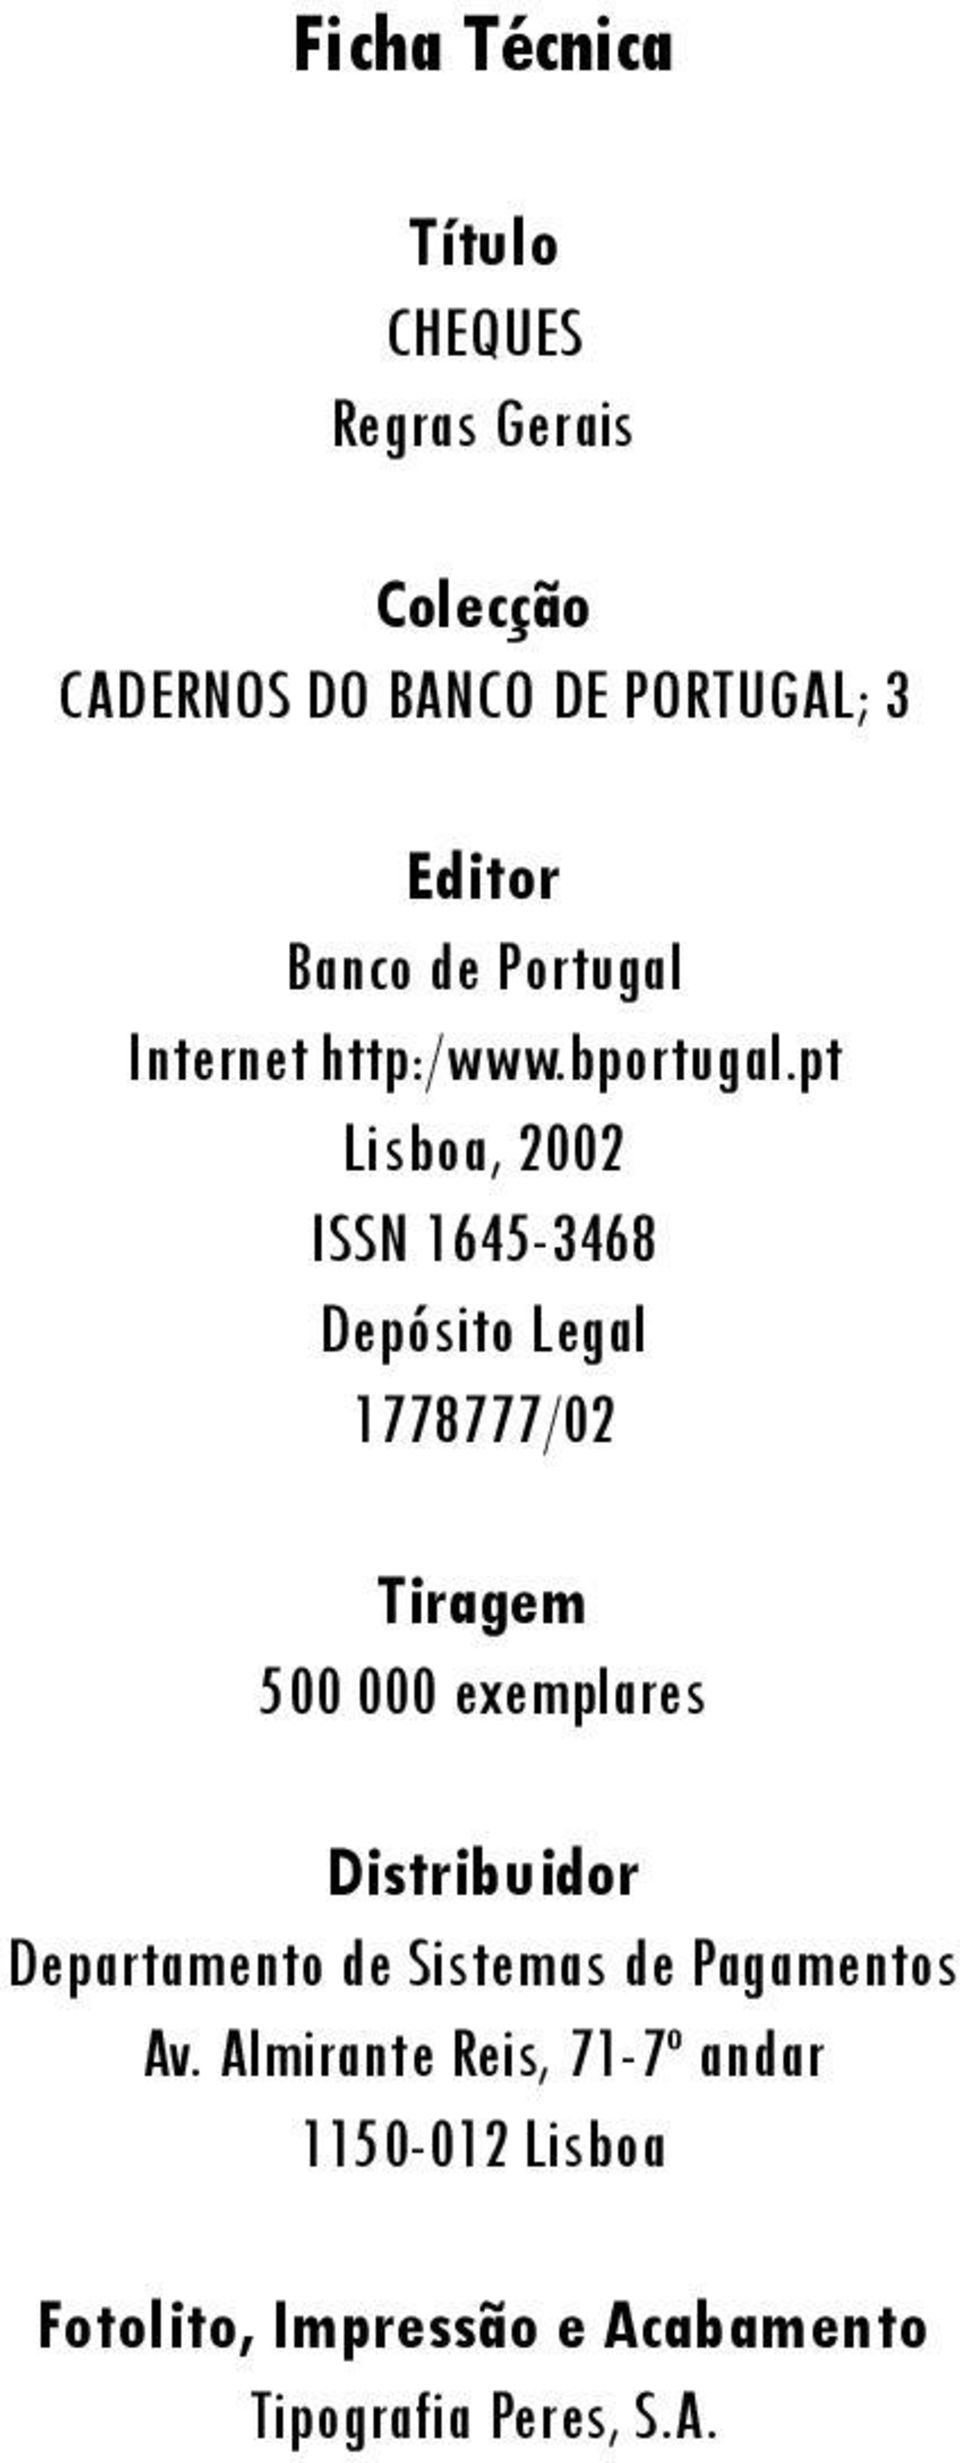 pt Lisboa, 2002 ISSN 1645-3468 Depósito Legal 1778777/02 Tiragem 500 000 exemplares